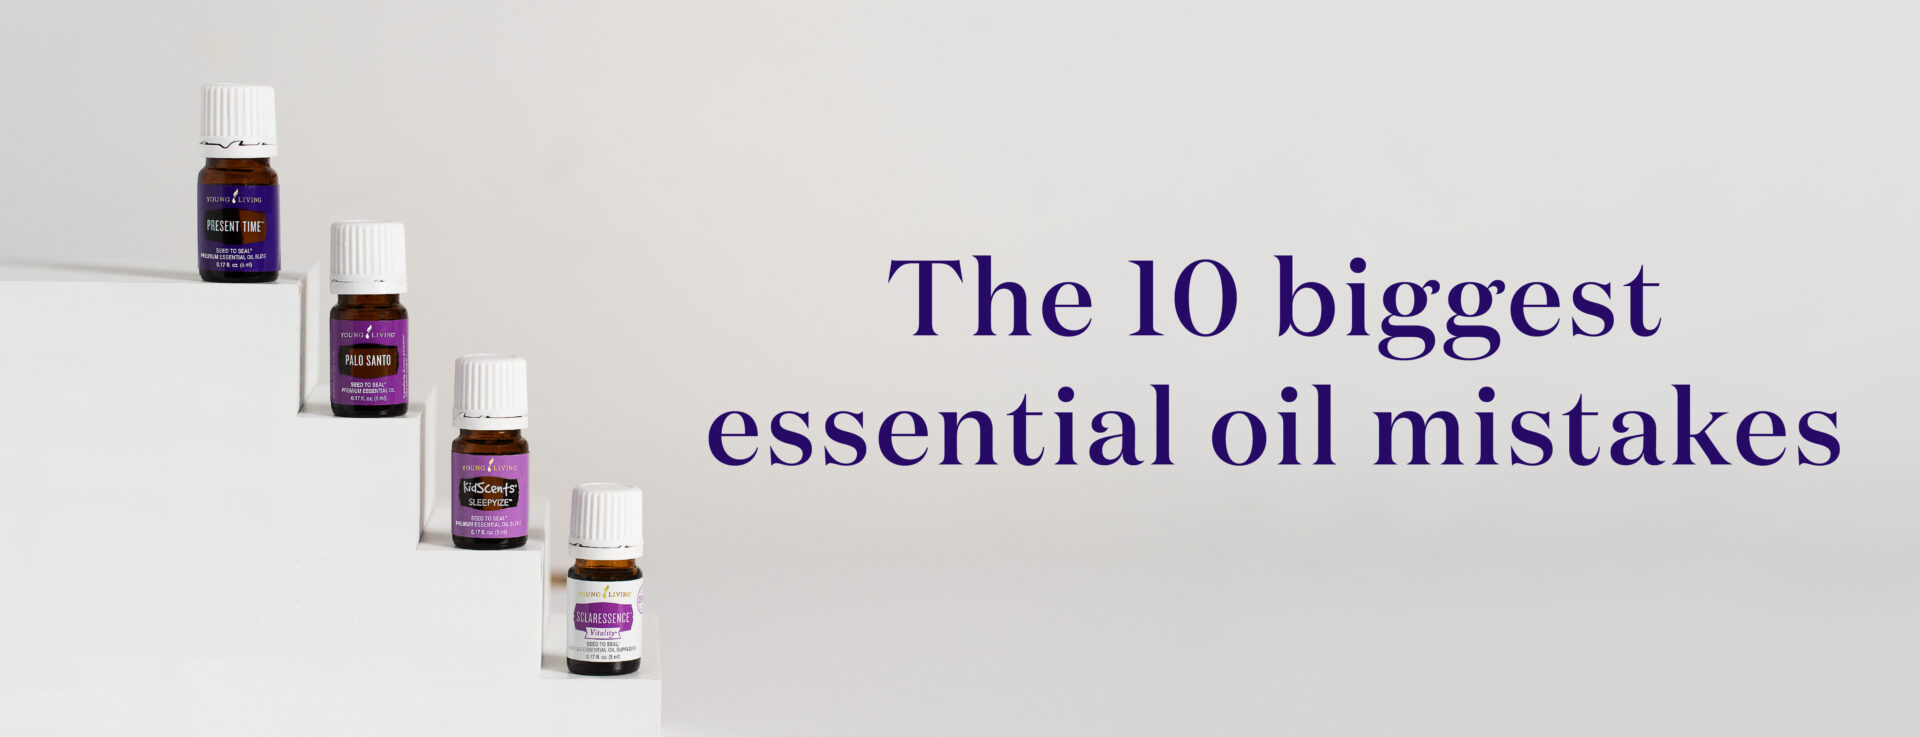 Sun Essential Oils Peppermint - Clean Wellness